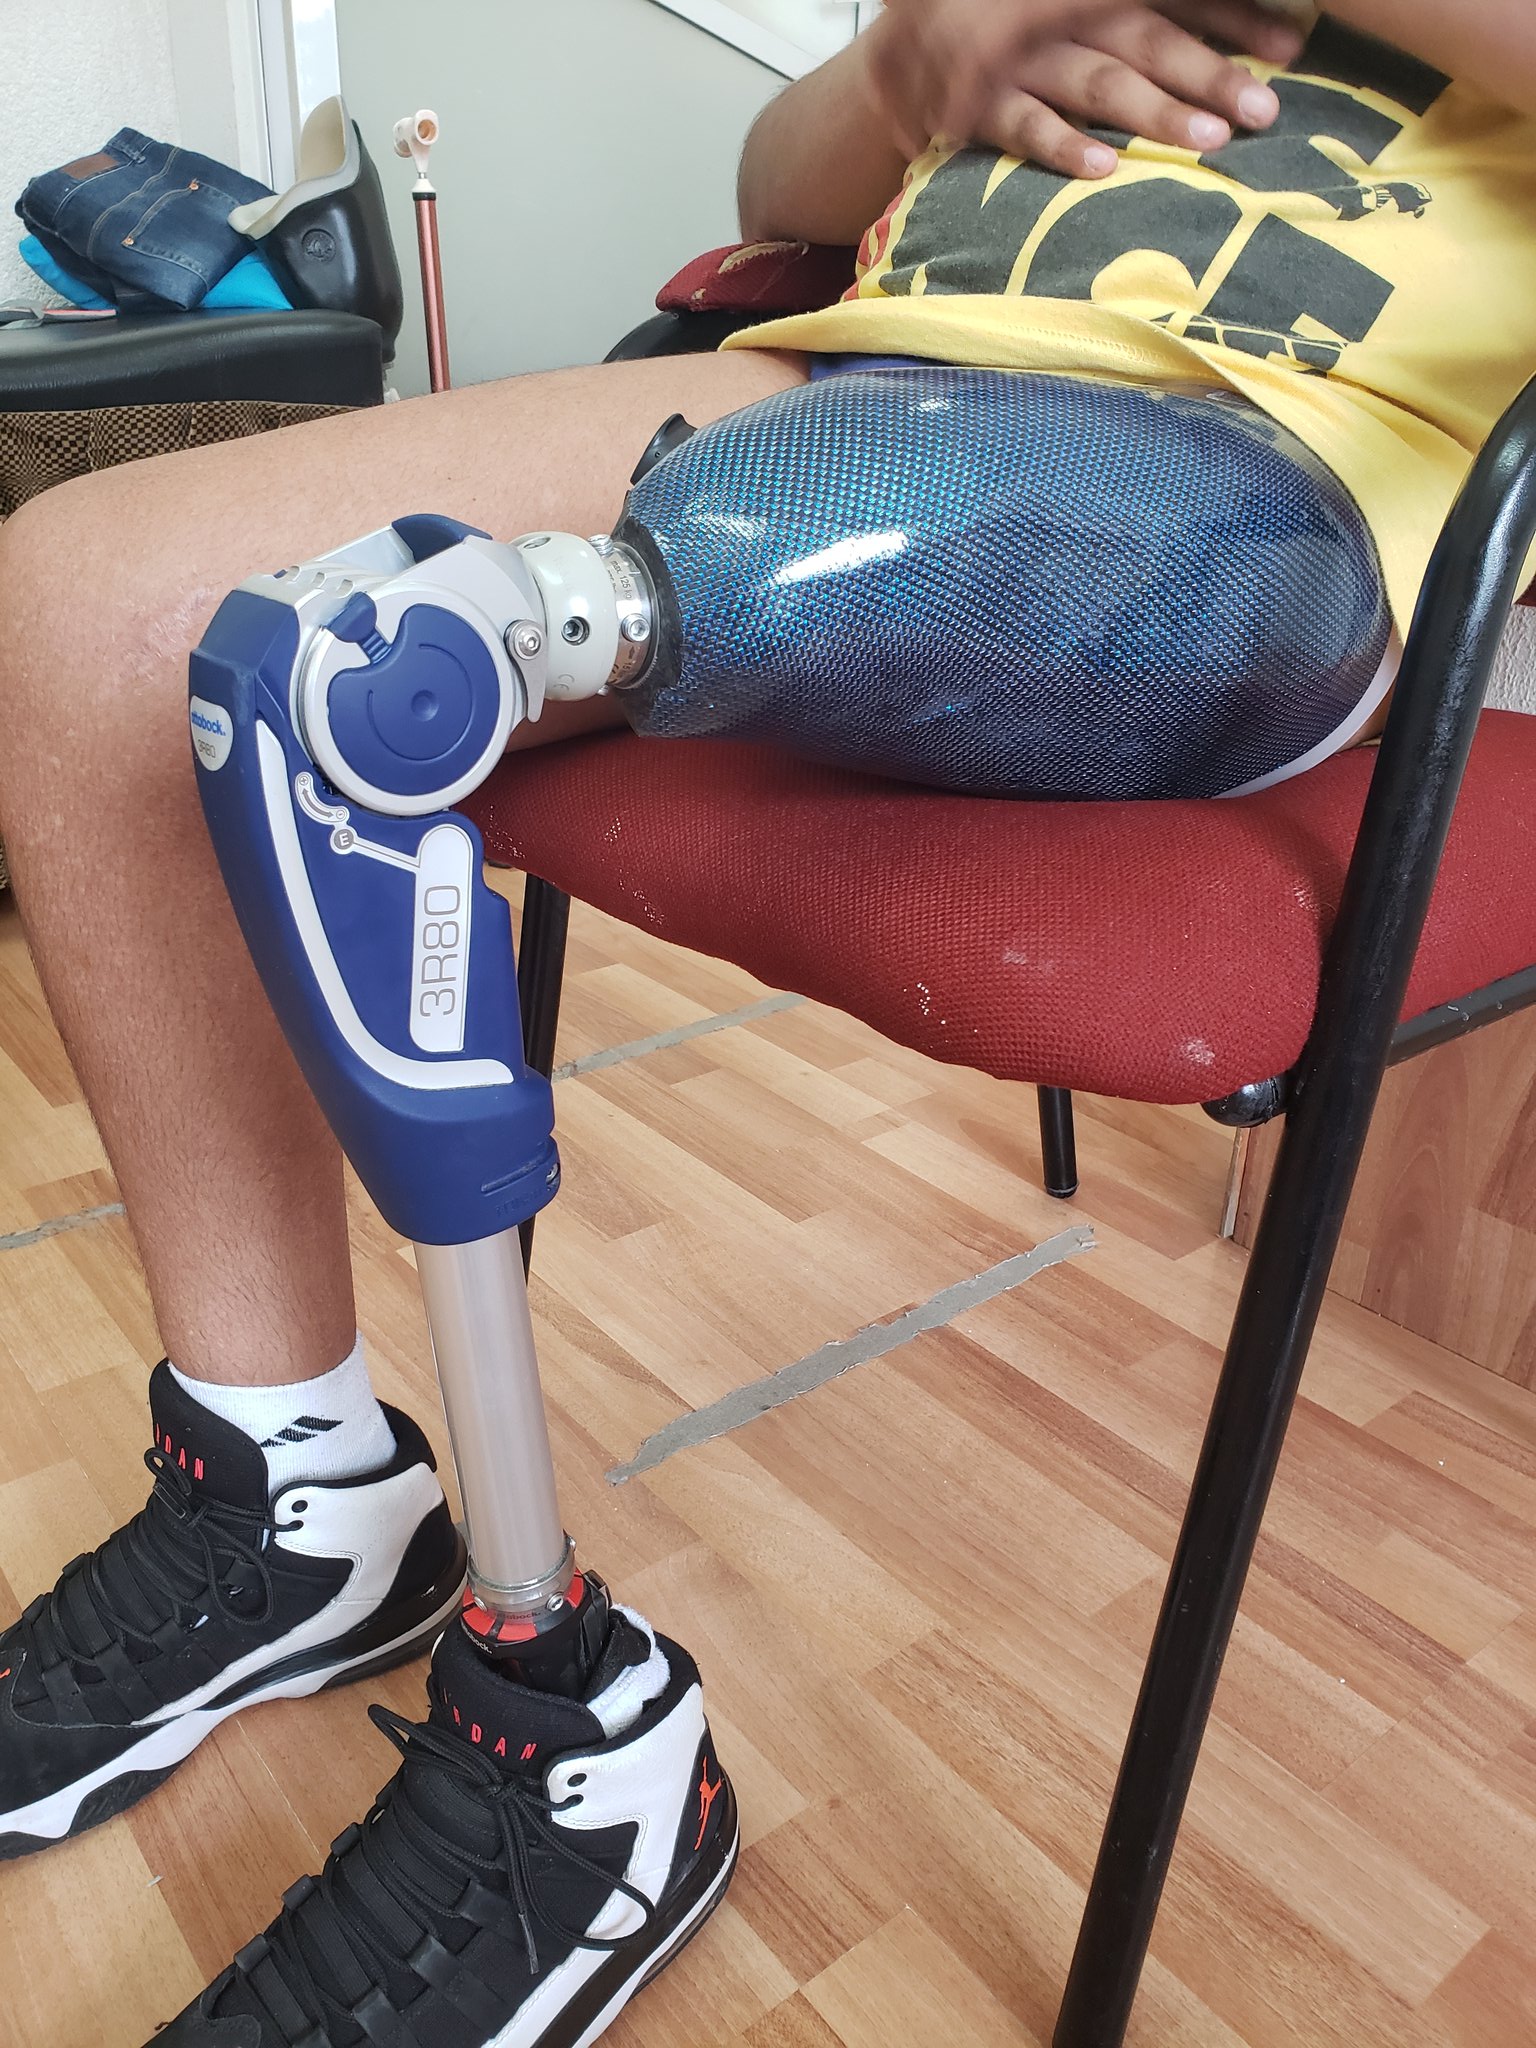 Alberto Villicaña Ortega on Twitter: "#protesis #ottobock #rehabiltar #3R80  #triton #ciencia #profesion https://t.co/V49Y72dIK1" / Twitter